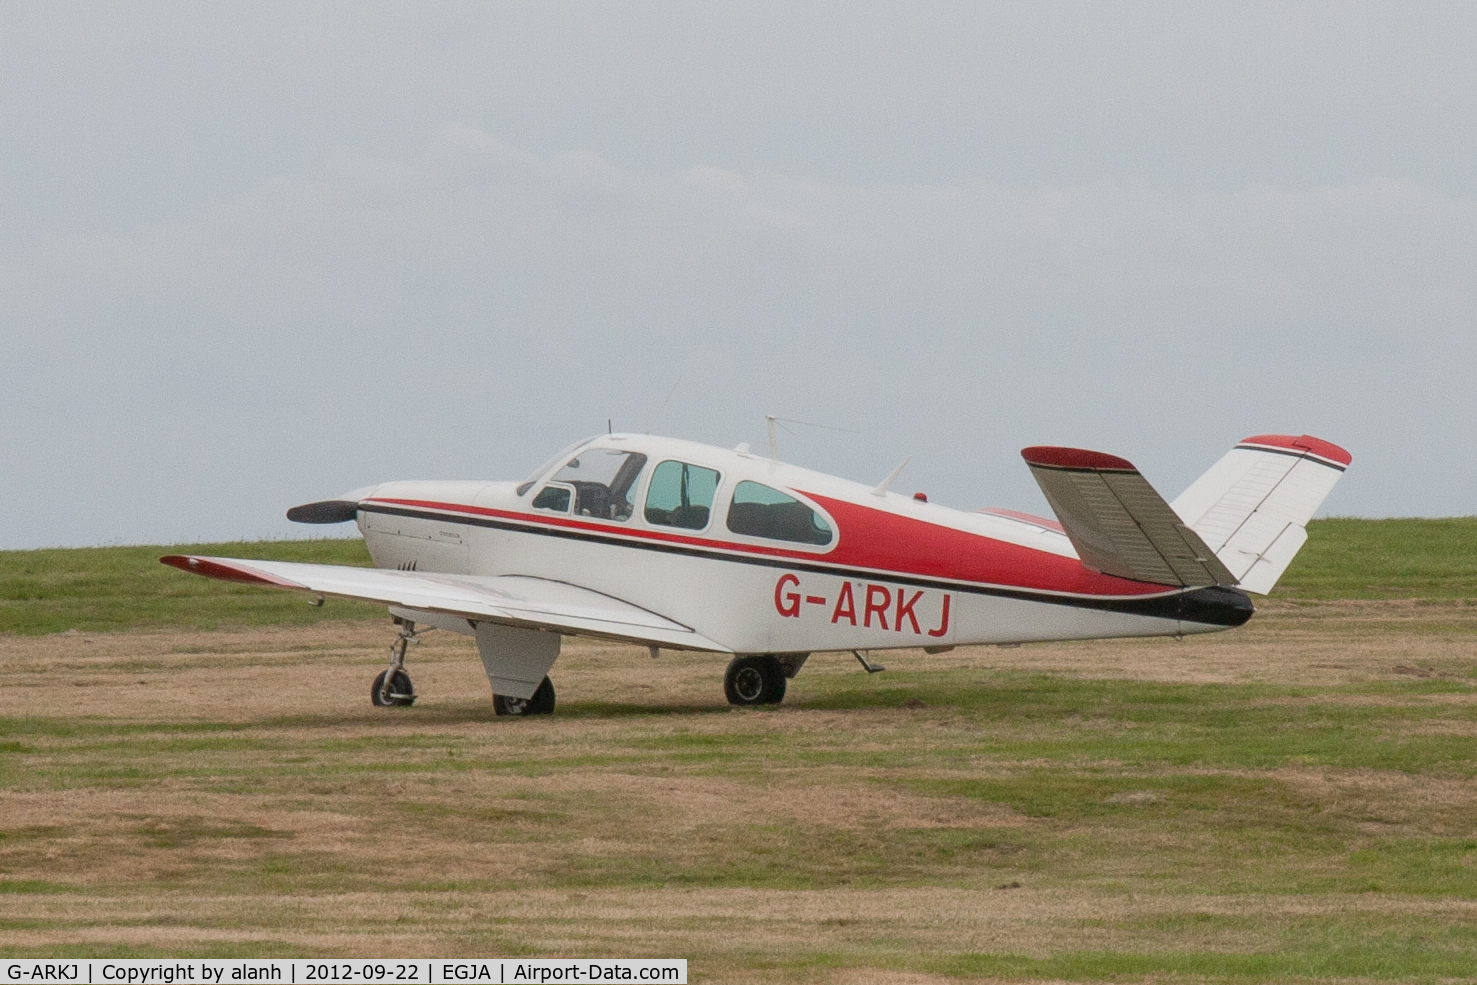 G-ARKJ, 1961 Beech N35 Bonanza C/N D-6736, visiting Alderney for the 2012 air races